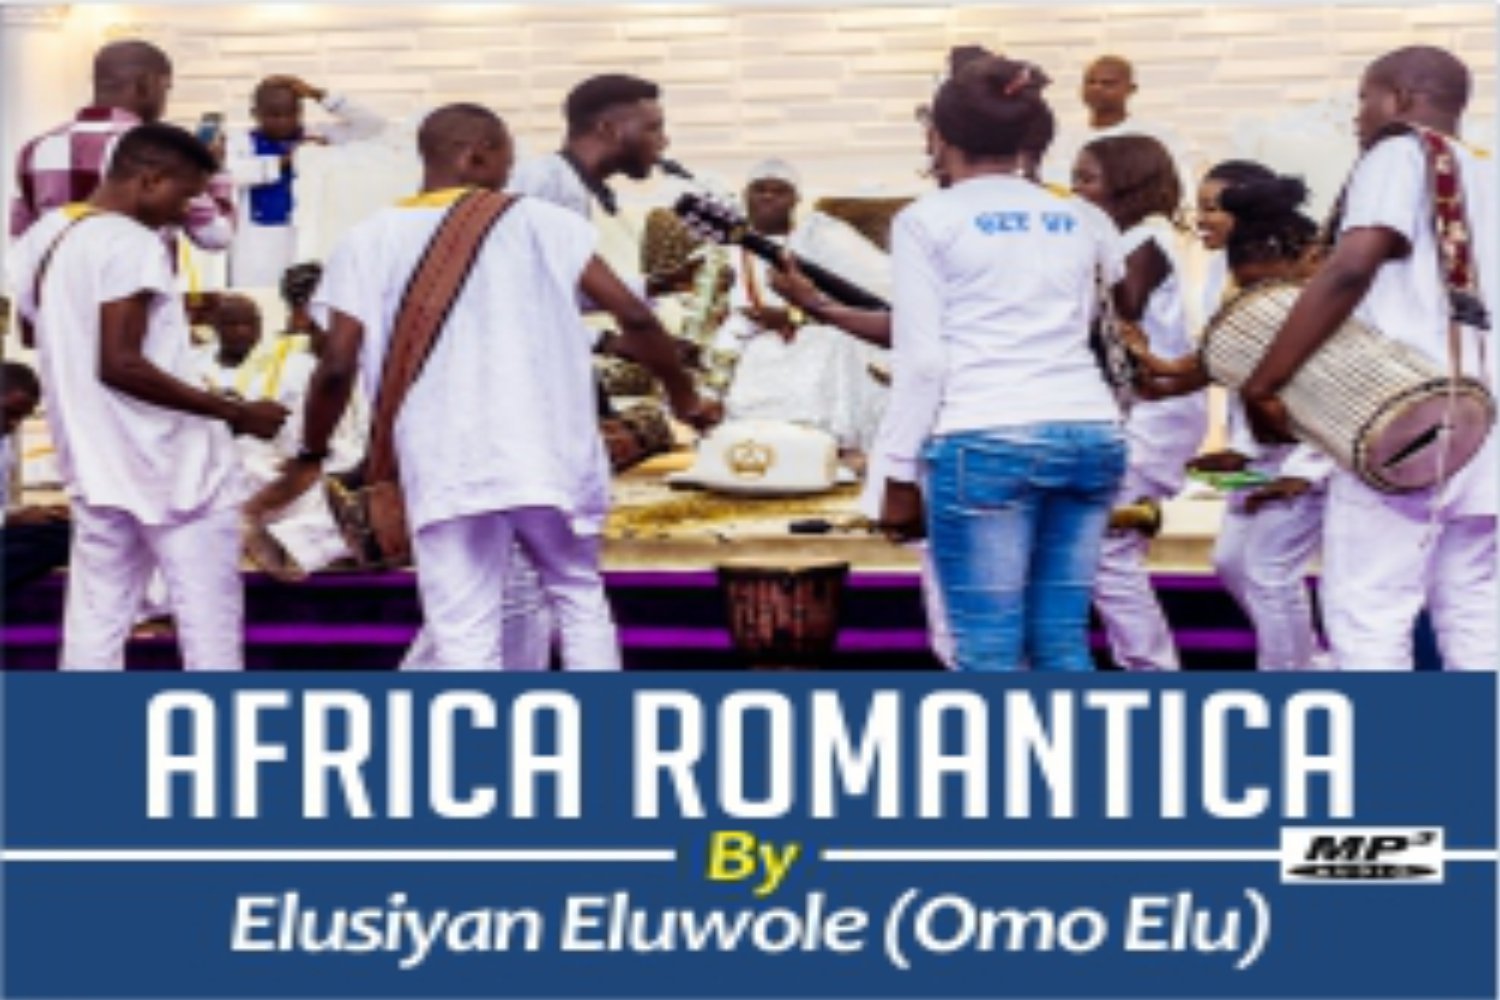 Omo-Elu Africa Romantica -CD-Cover